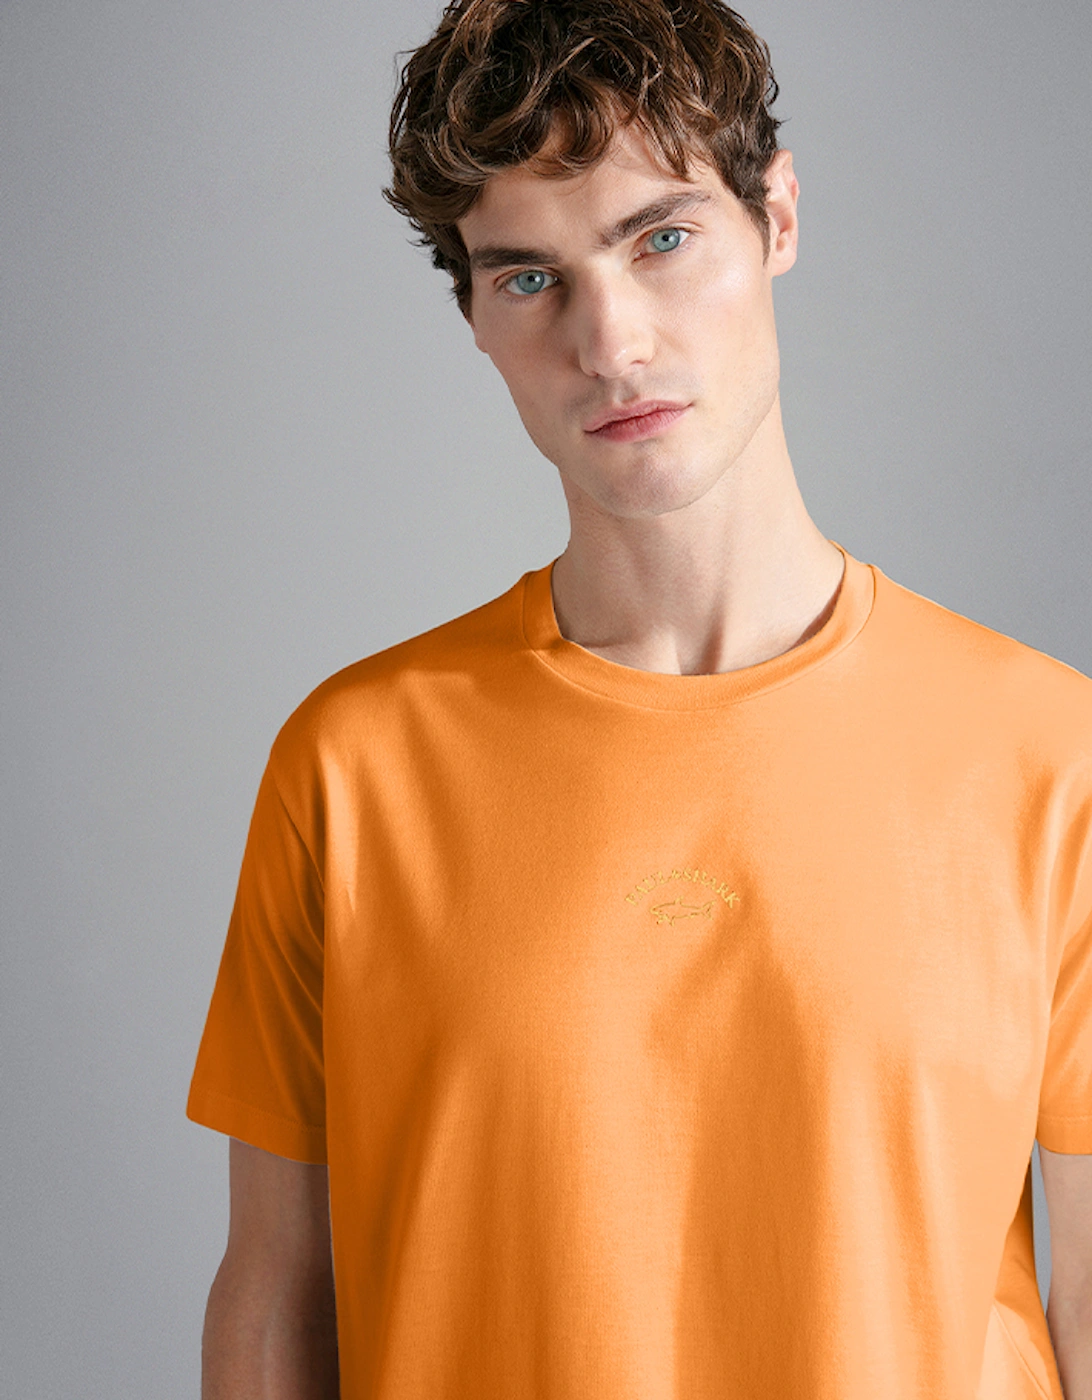 Men's Cotton Jersey T-Shirt with Gold Reflex Print